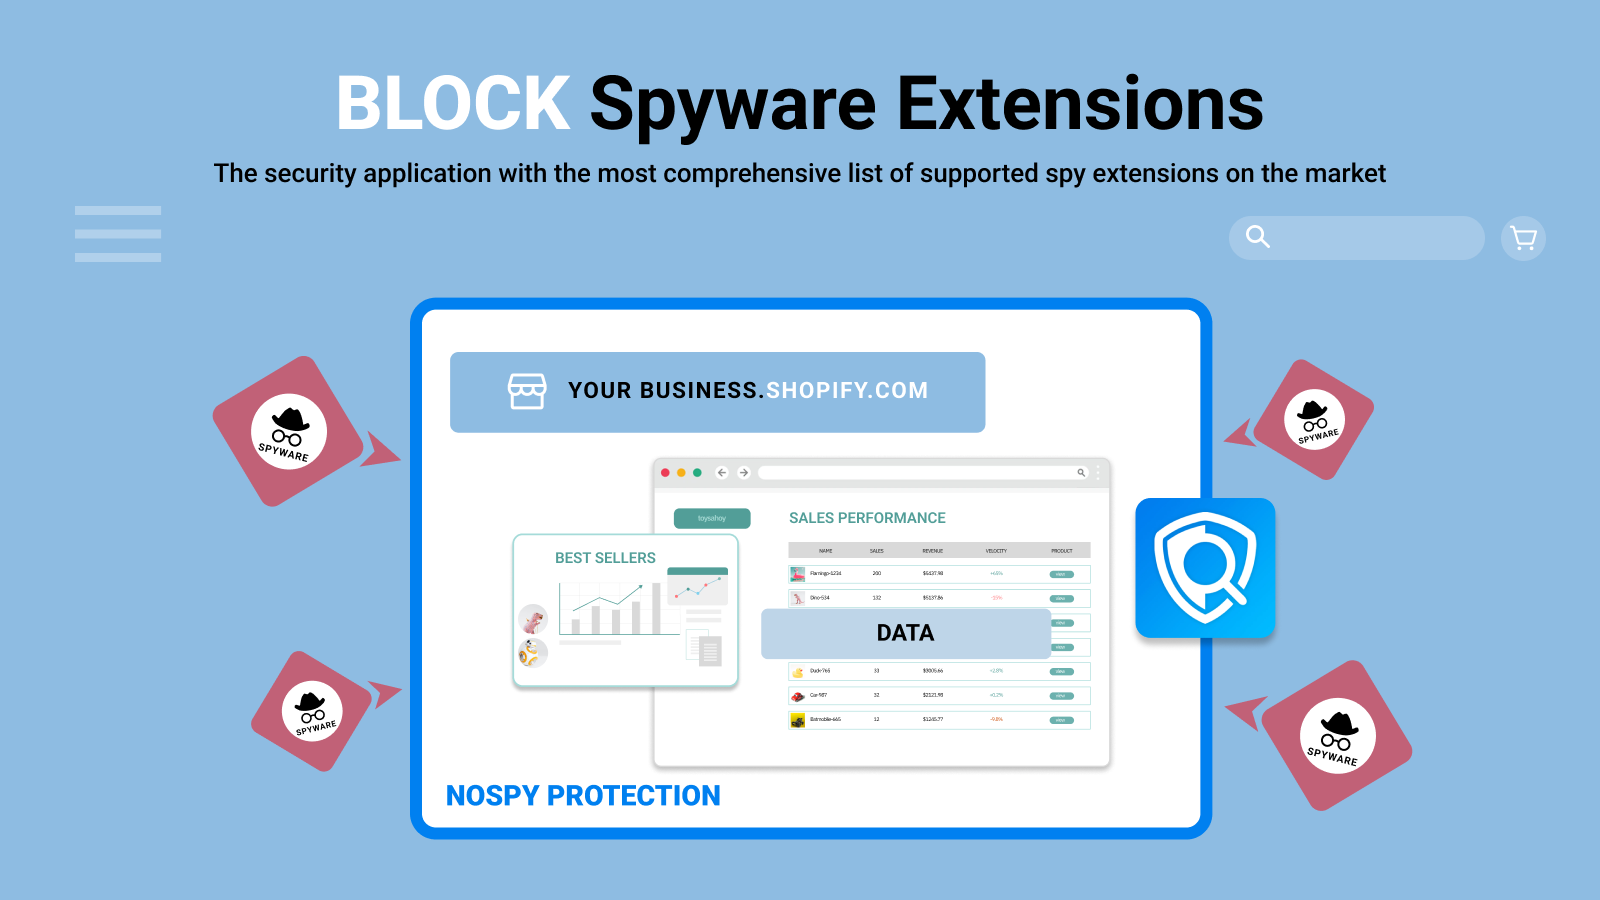 Block Spy Extensions